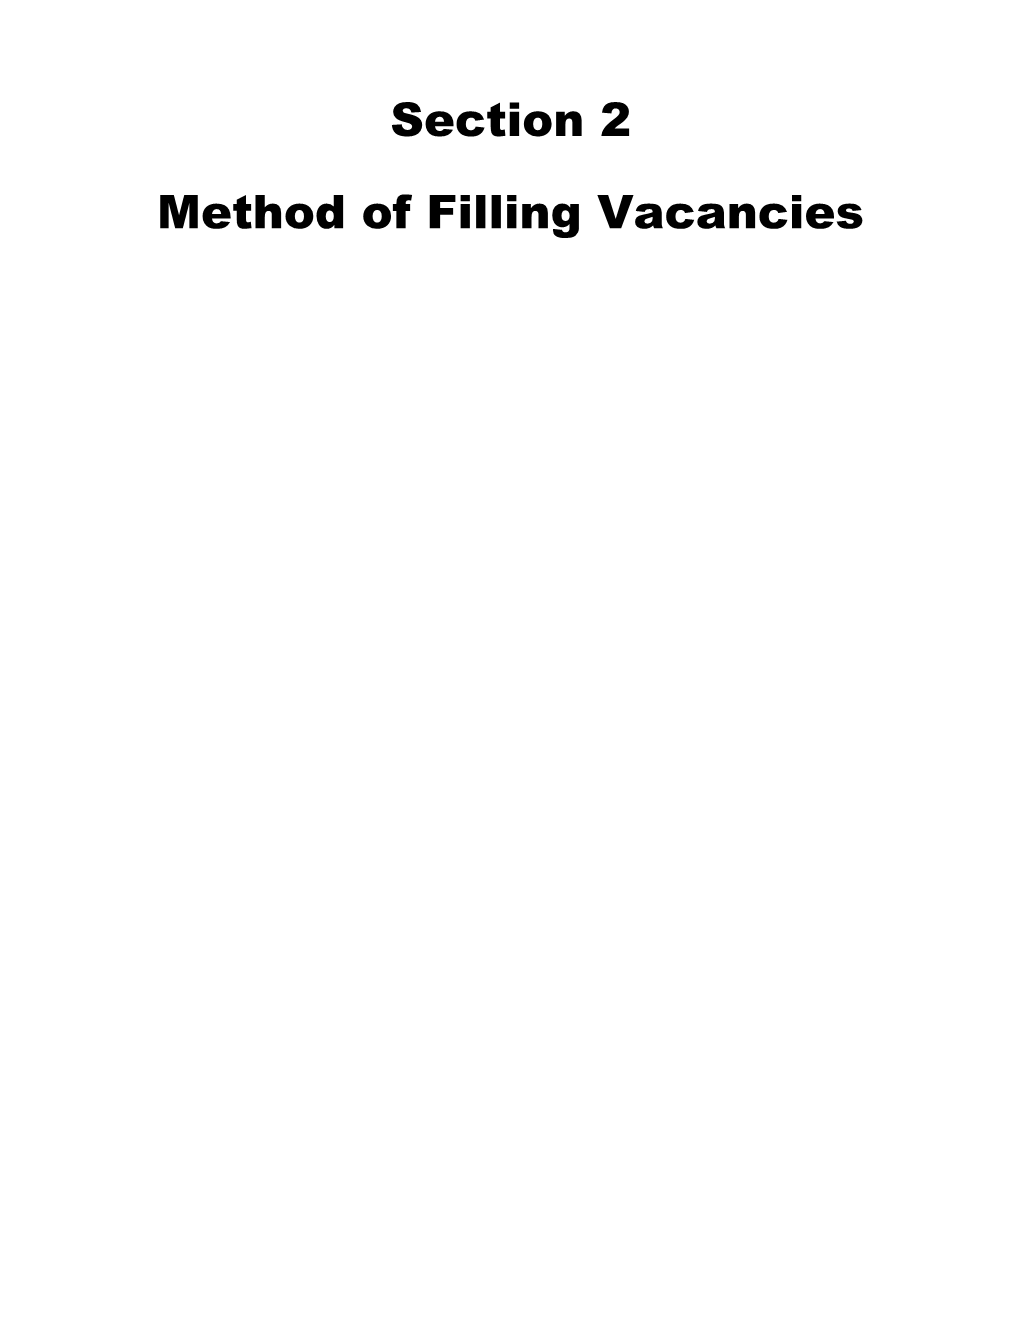 Vacancies: Identification, Announcements, & Applications